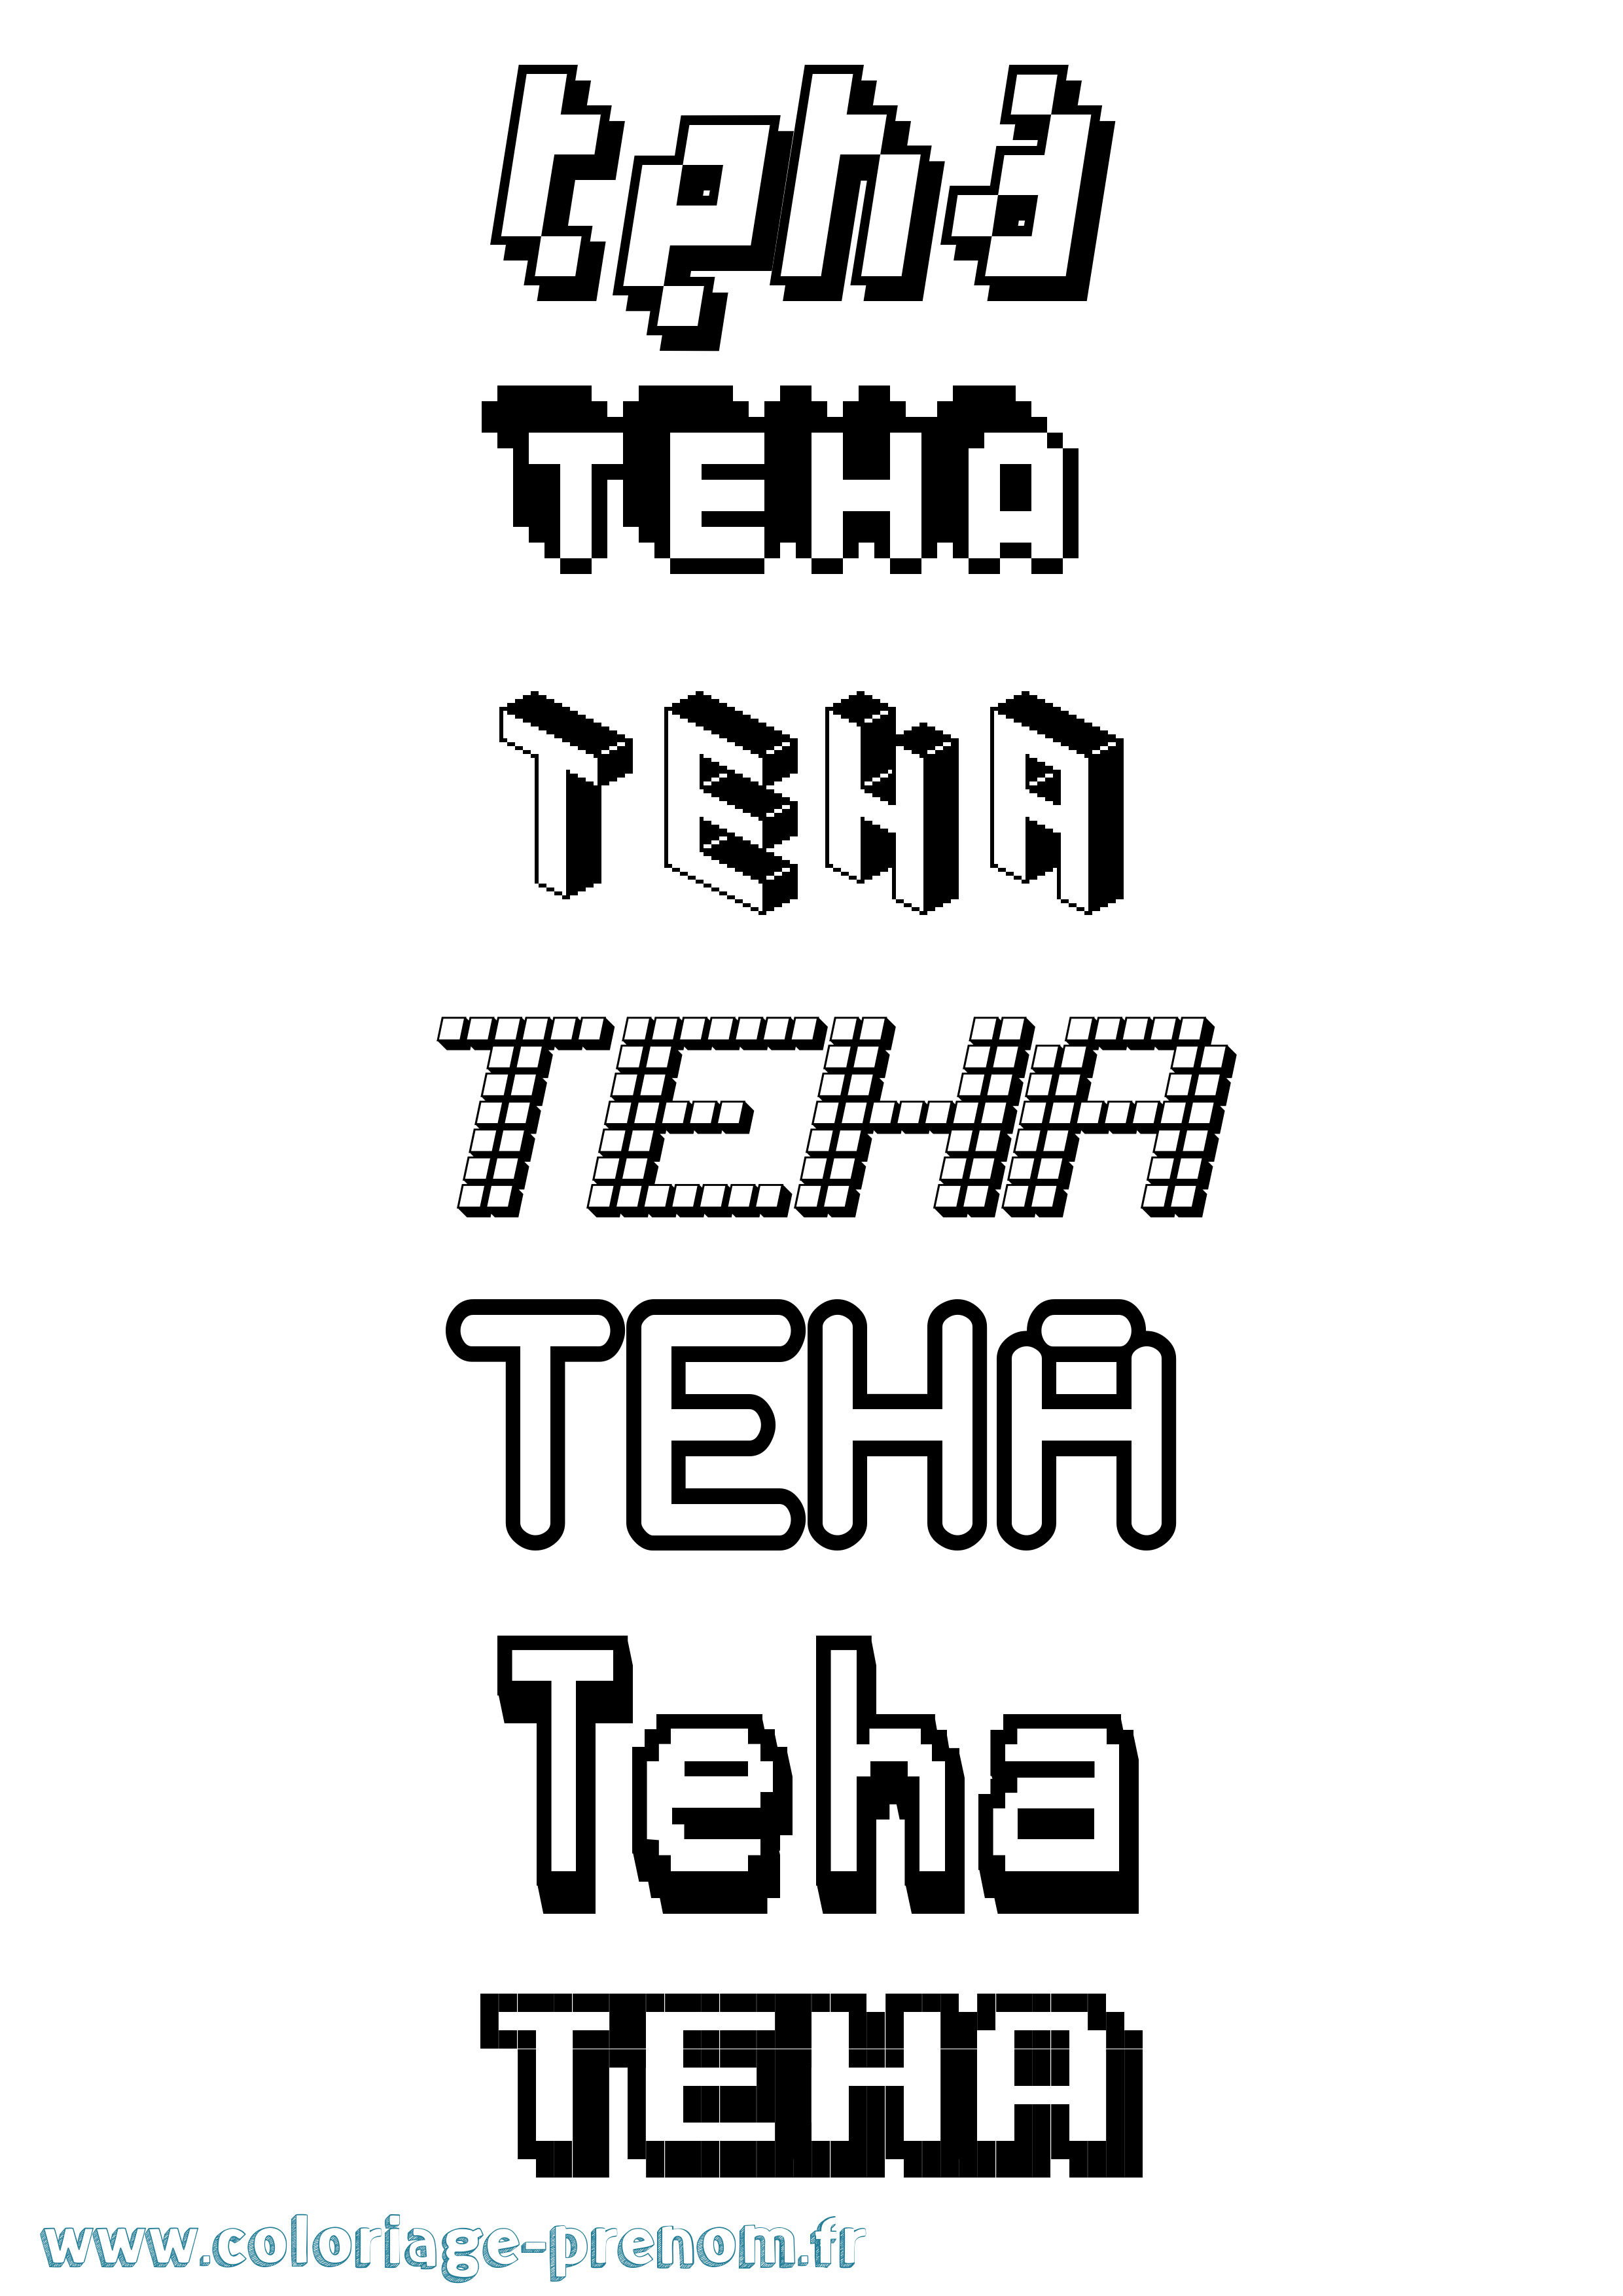 Coloriage prénom Teha Pixel